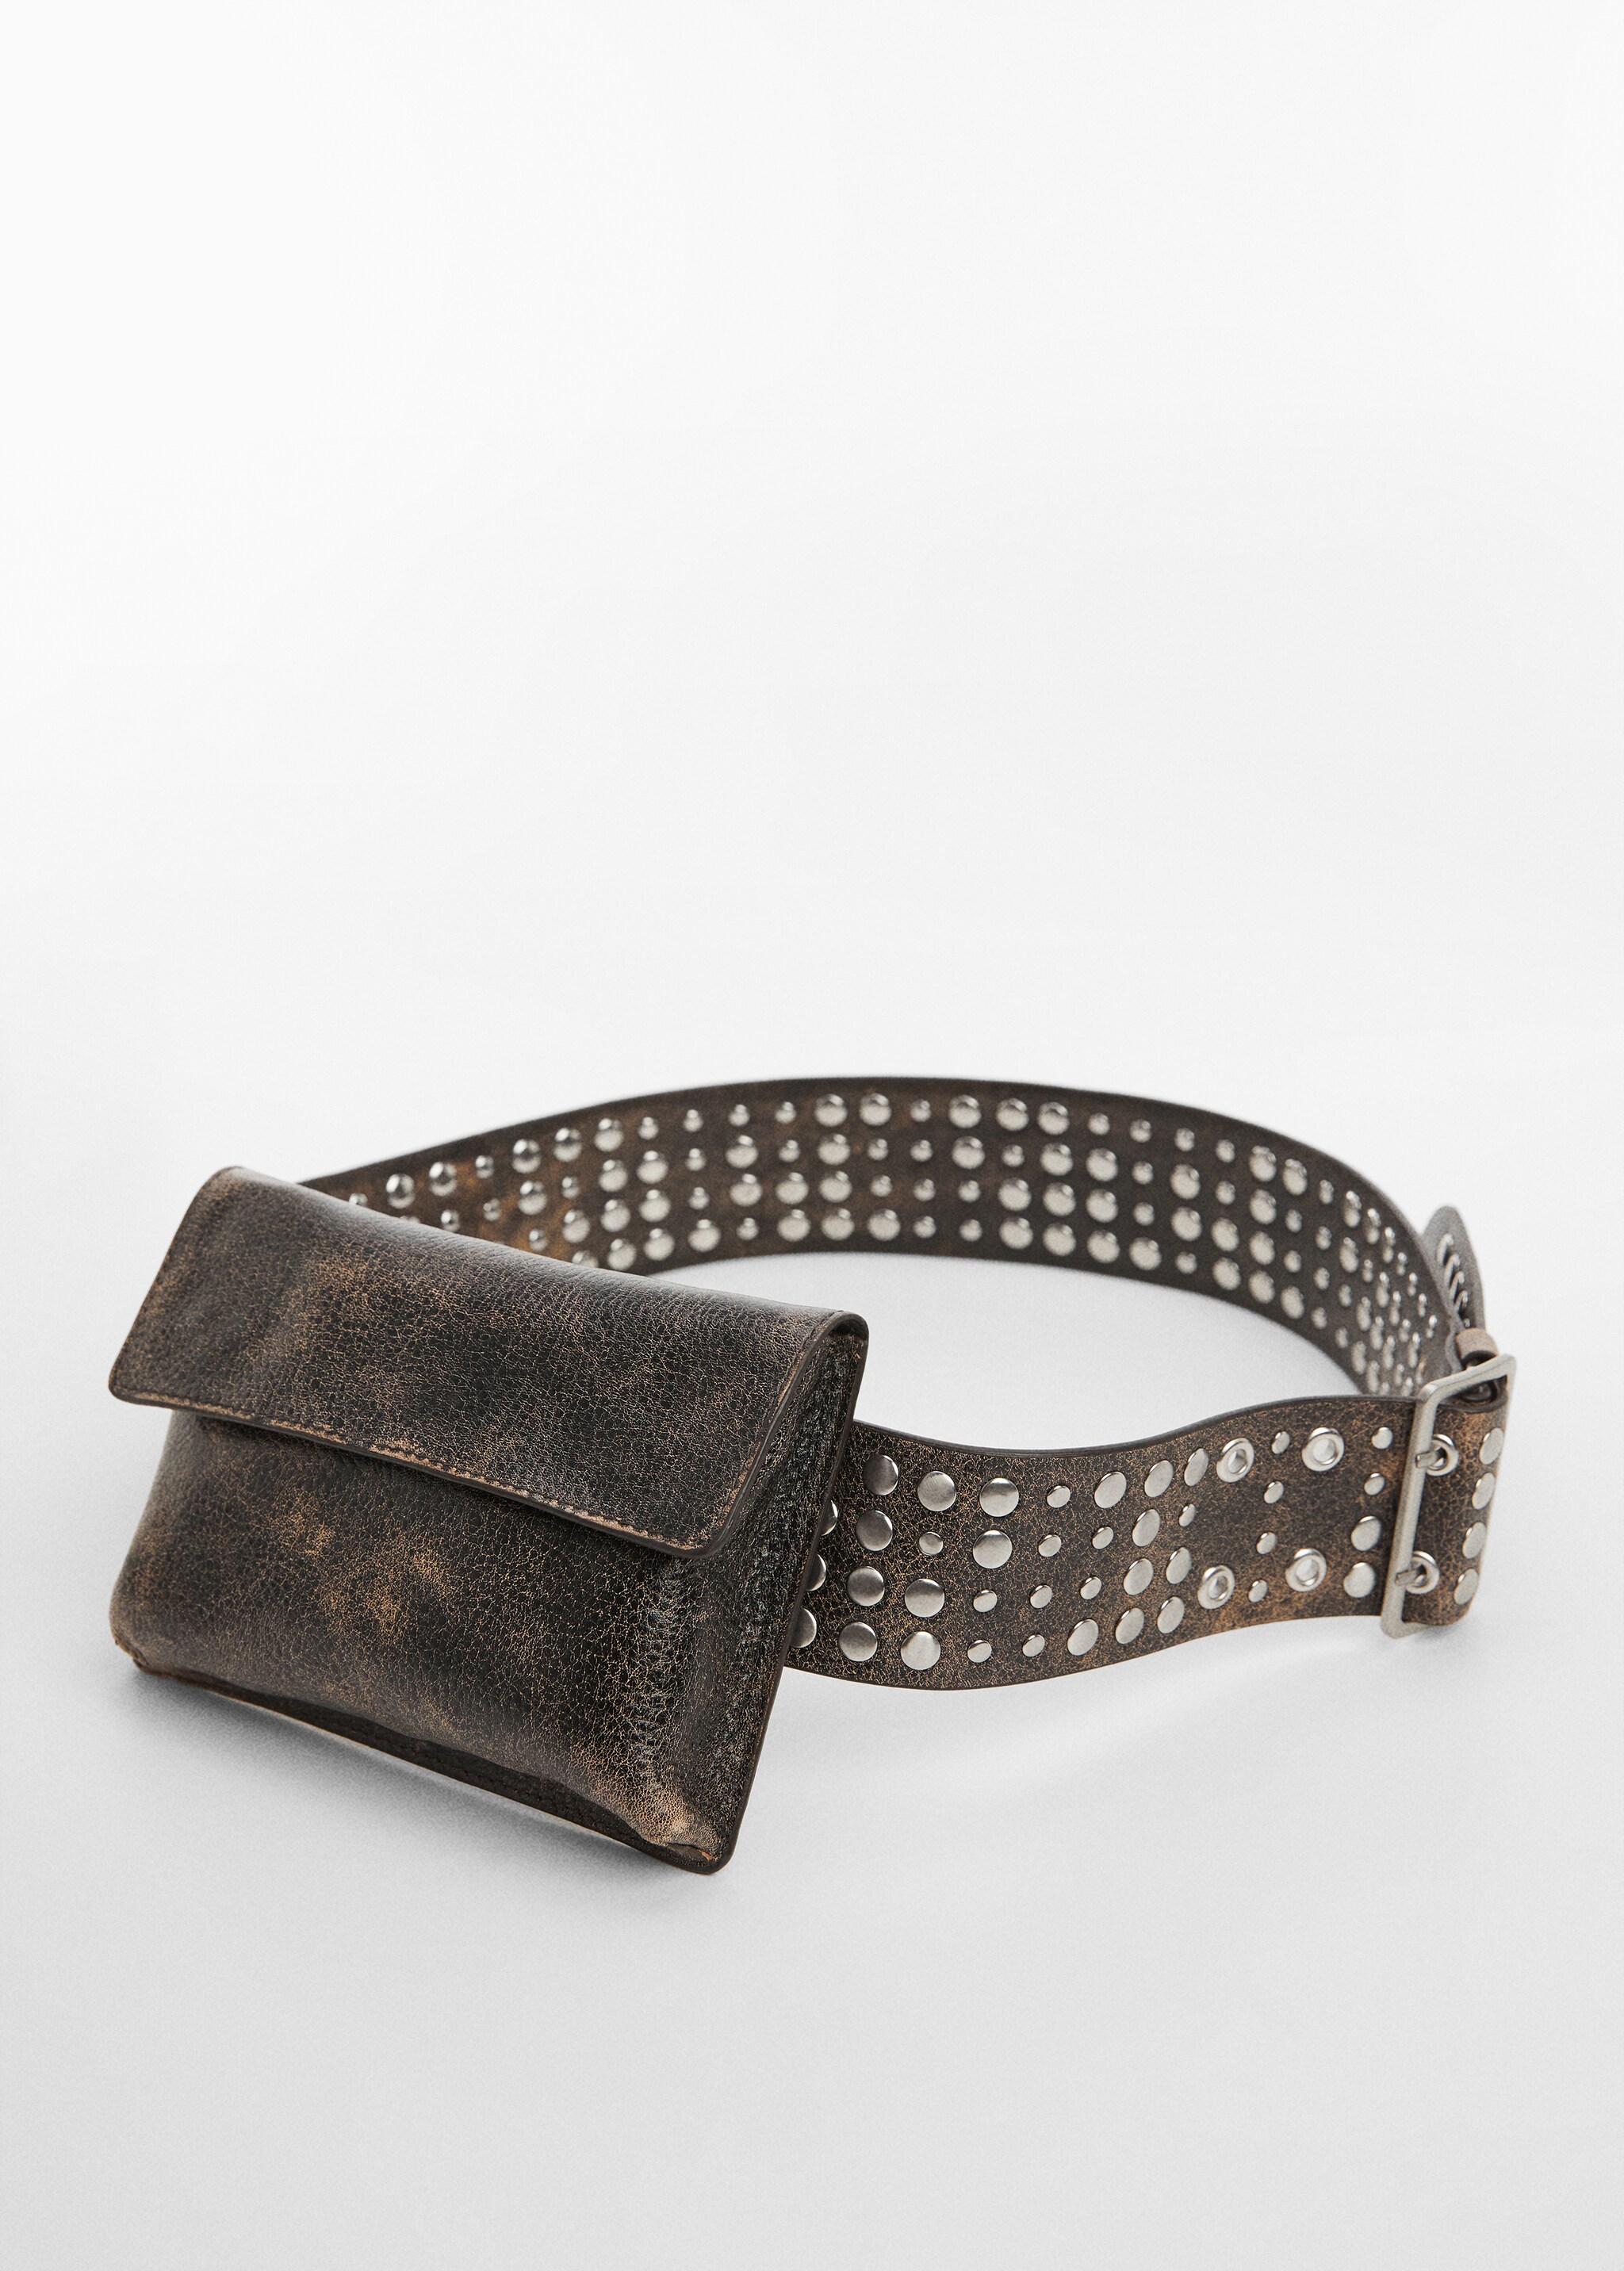 Studded leather money belt - Medium plane